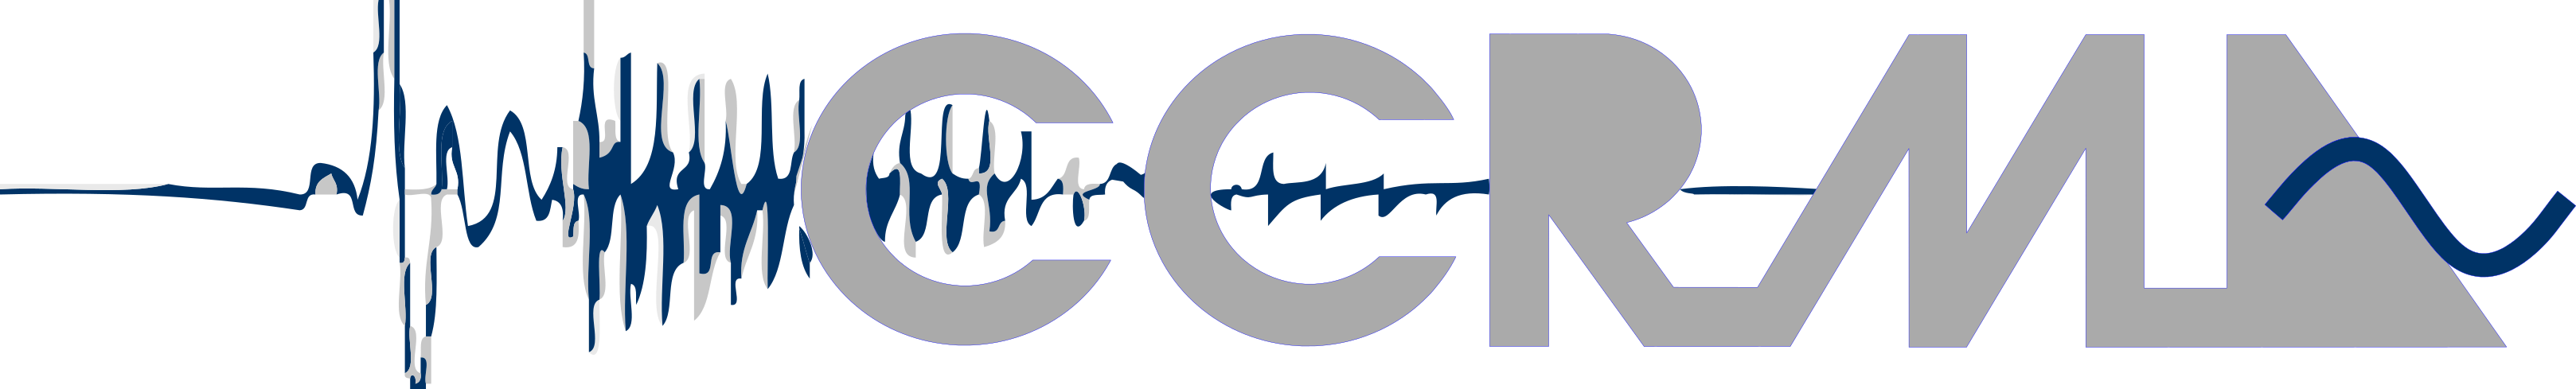 Logo CCRMA